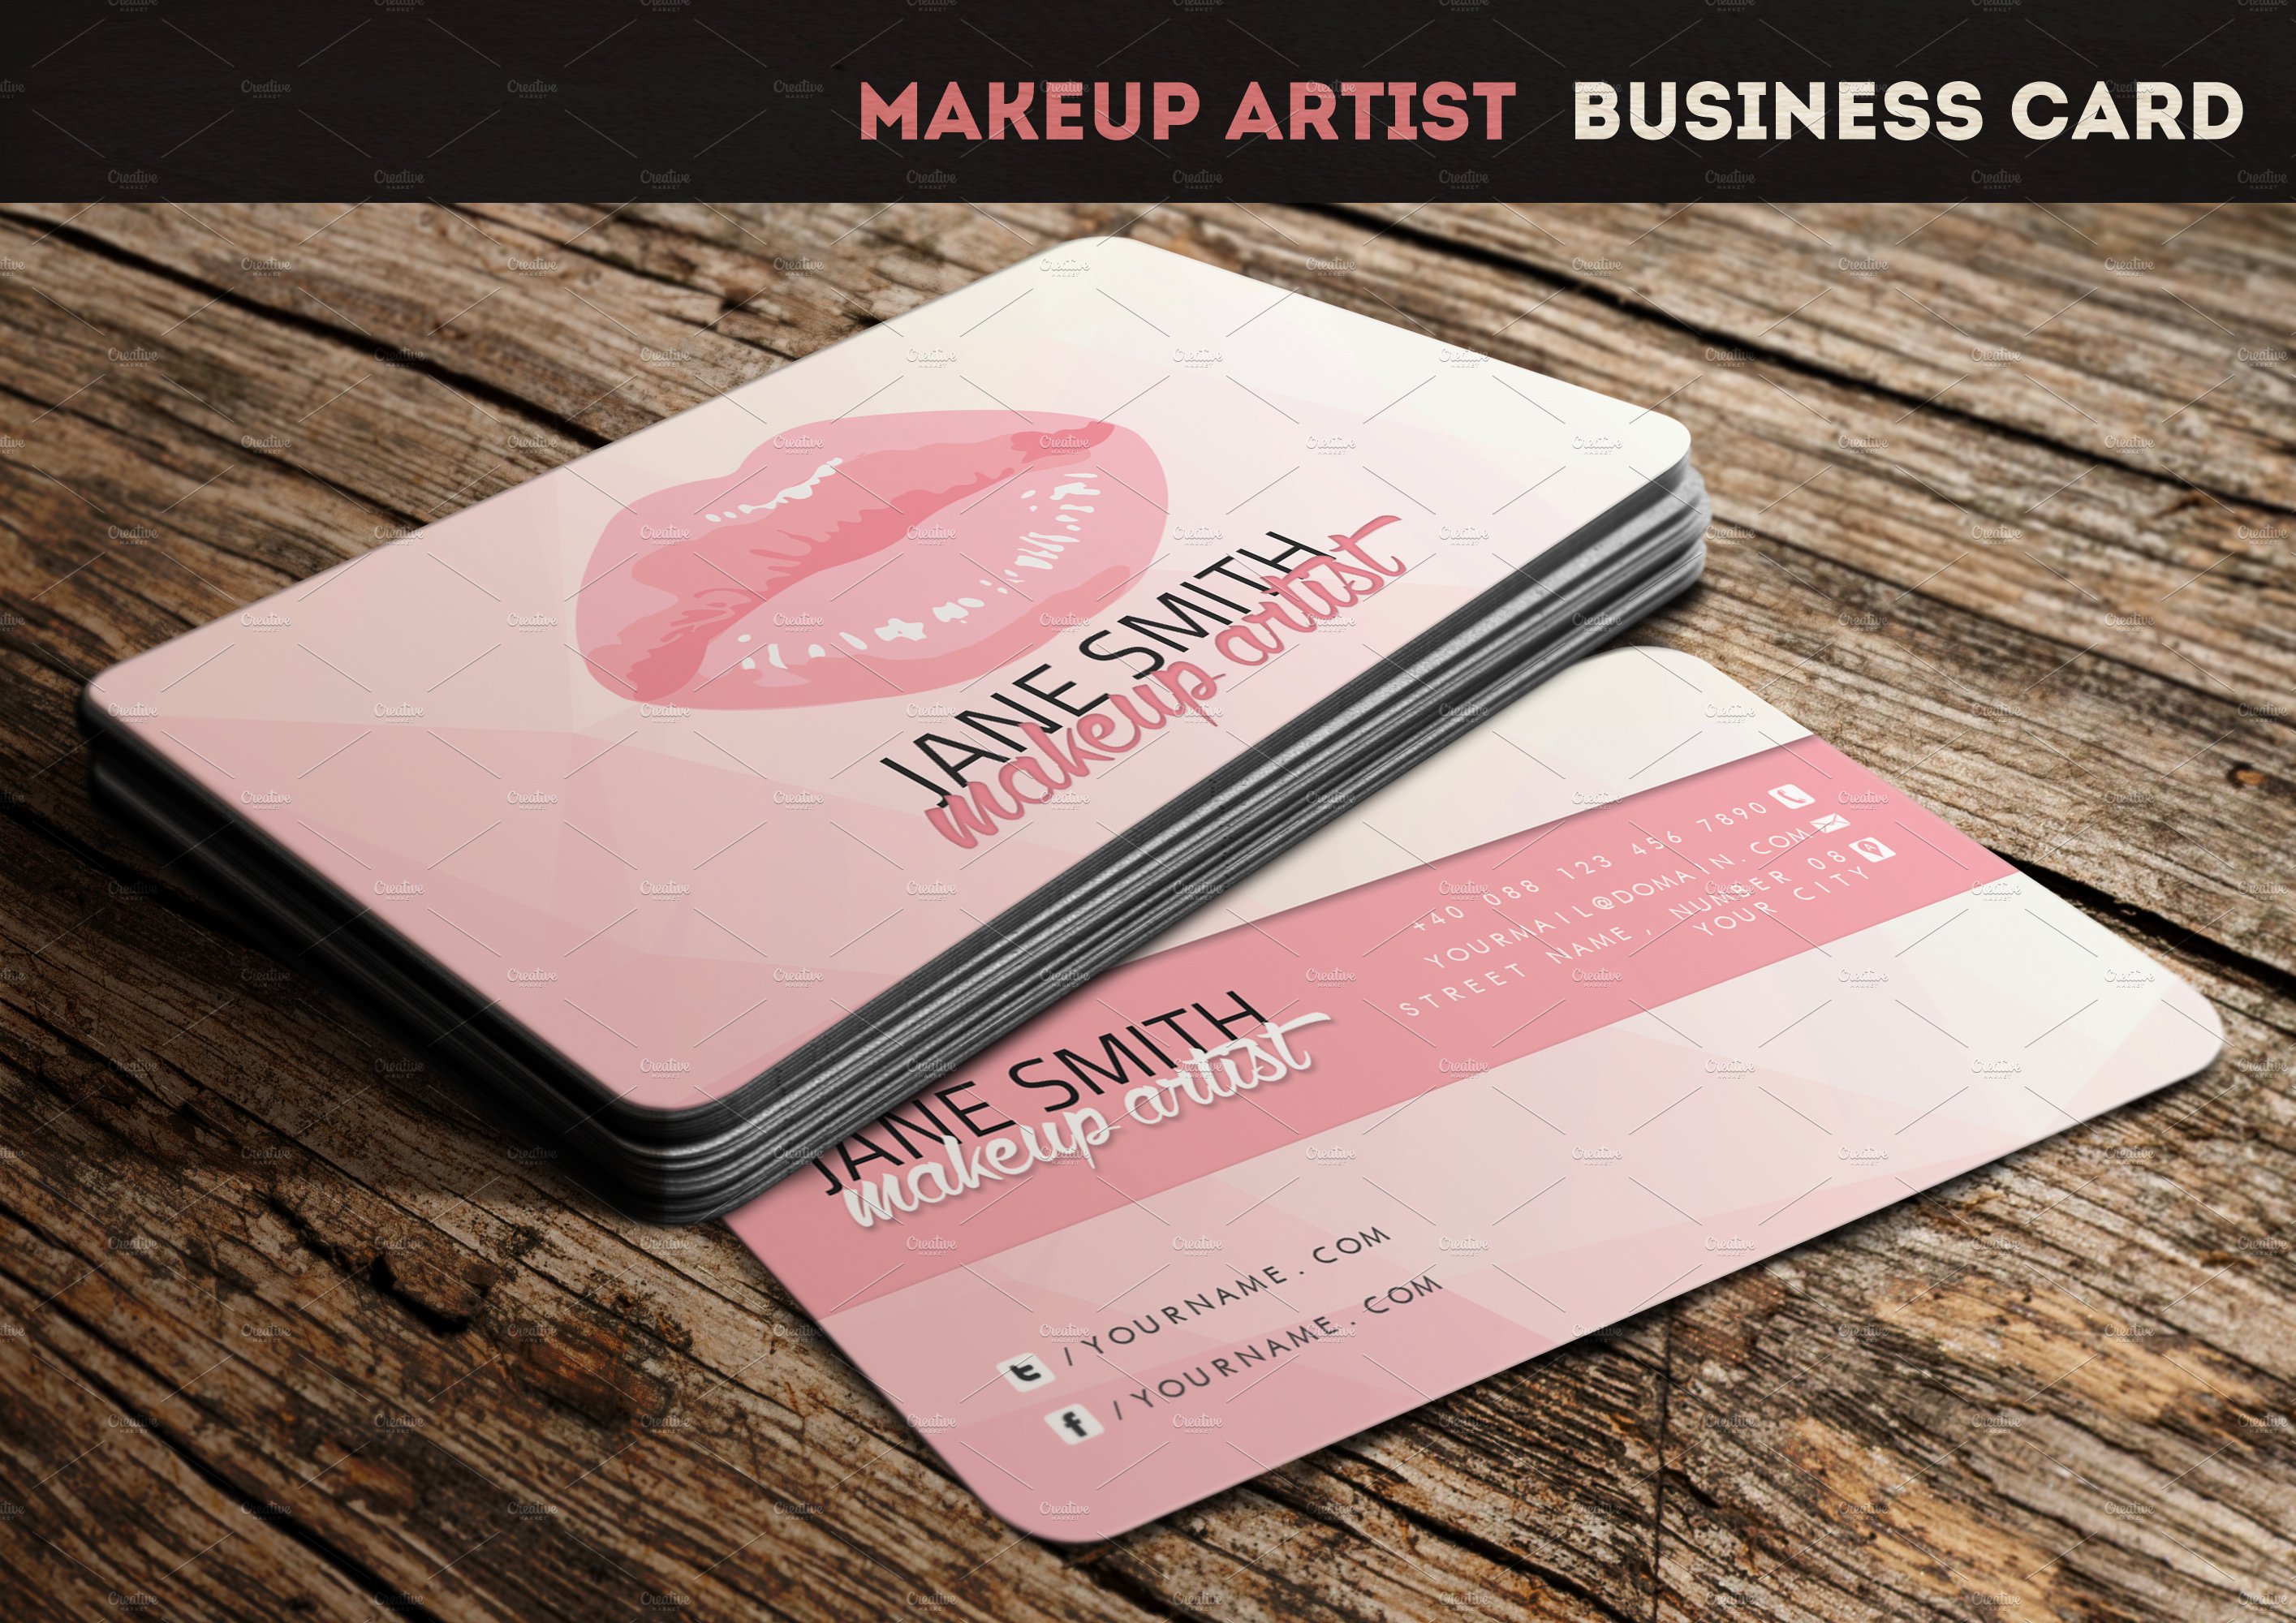 ideas for makeup artist business names